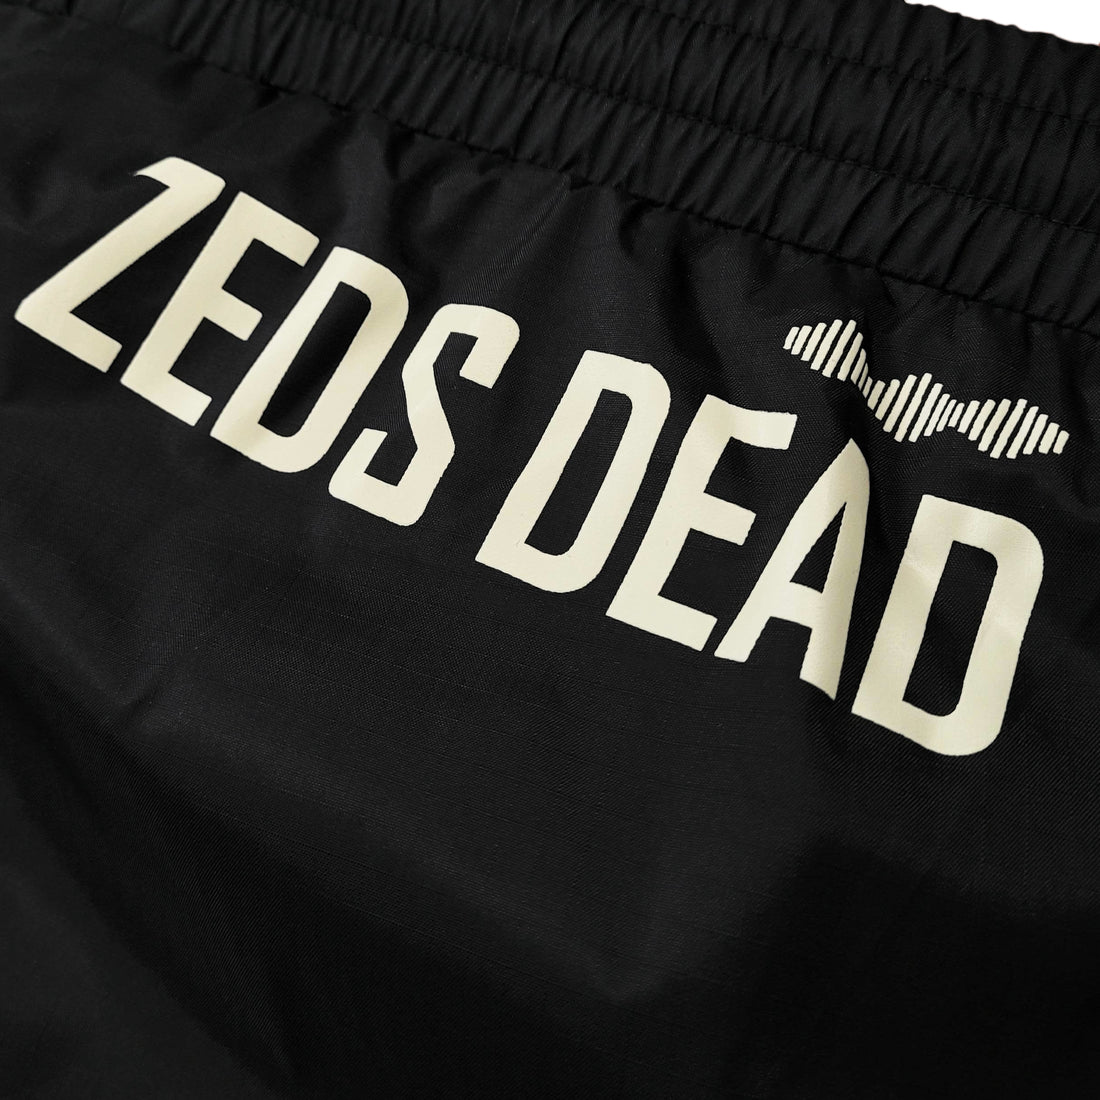 ZEDS DEAD - Deadicated - Ripstop Nylon Shorts